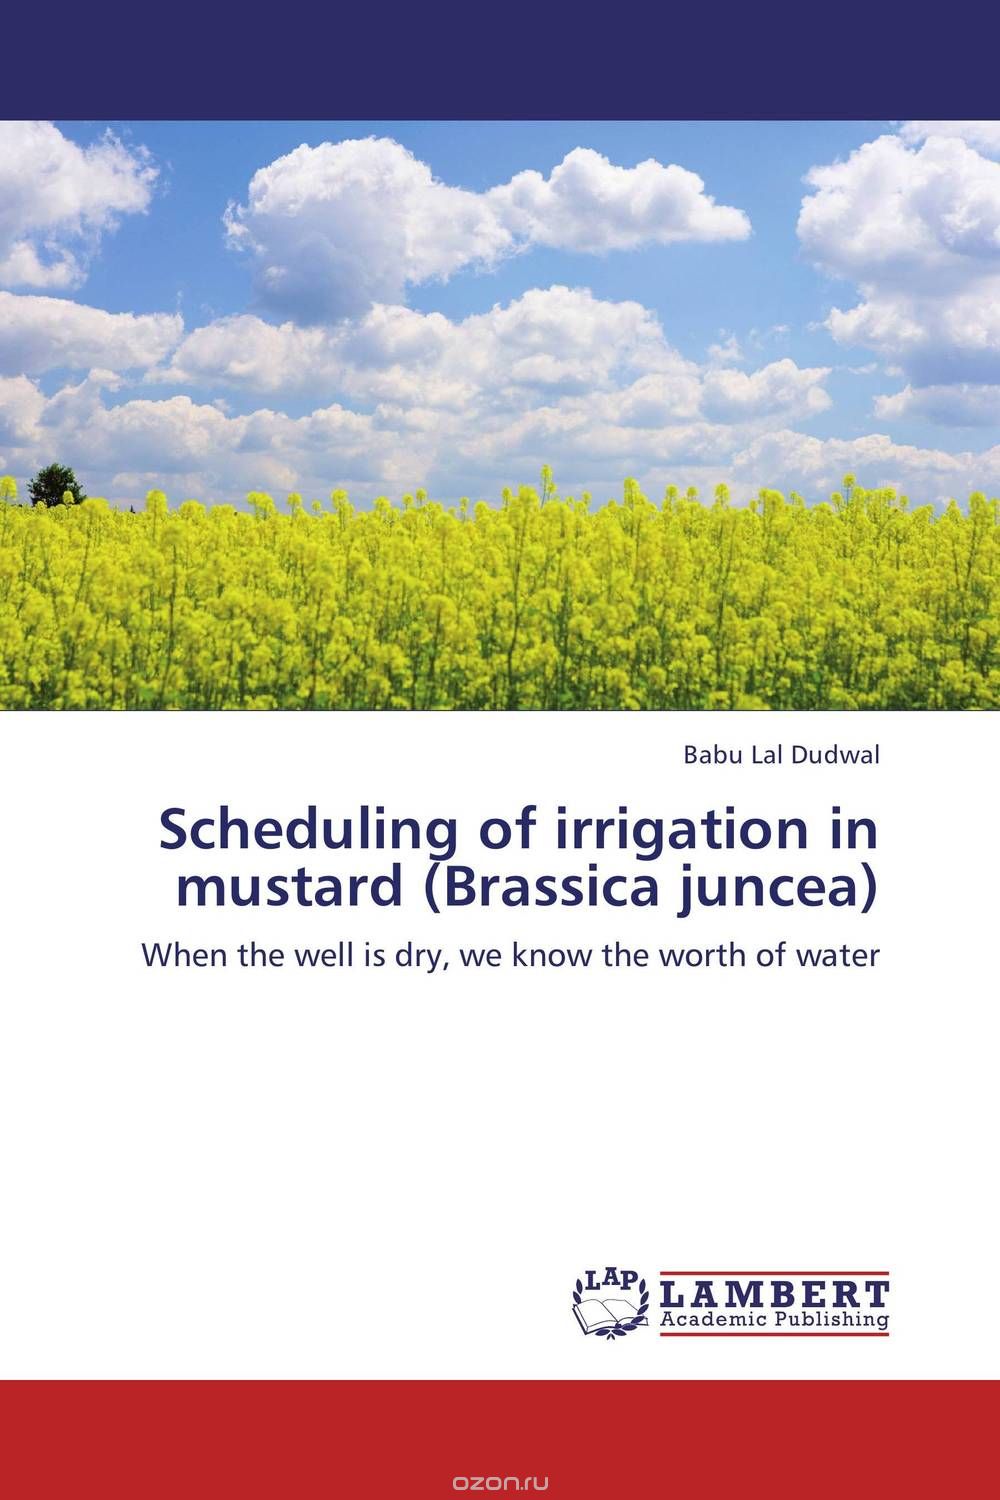 Скачать книгу "Scheduling of irrigation in mustard (Brassica juncea)"